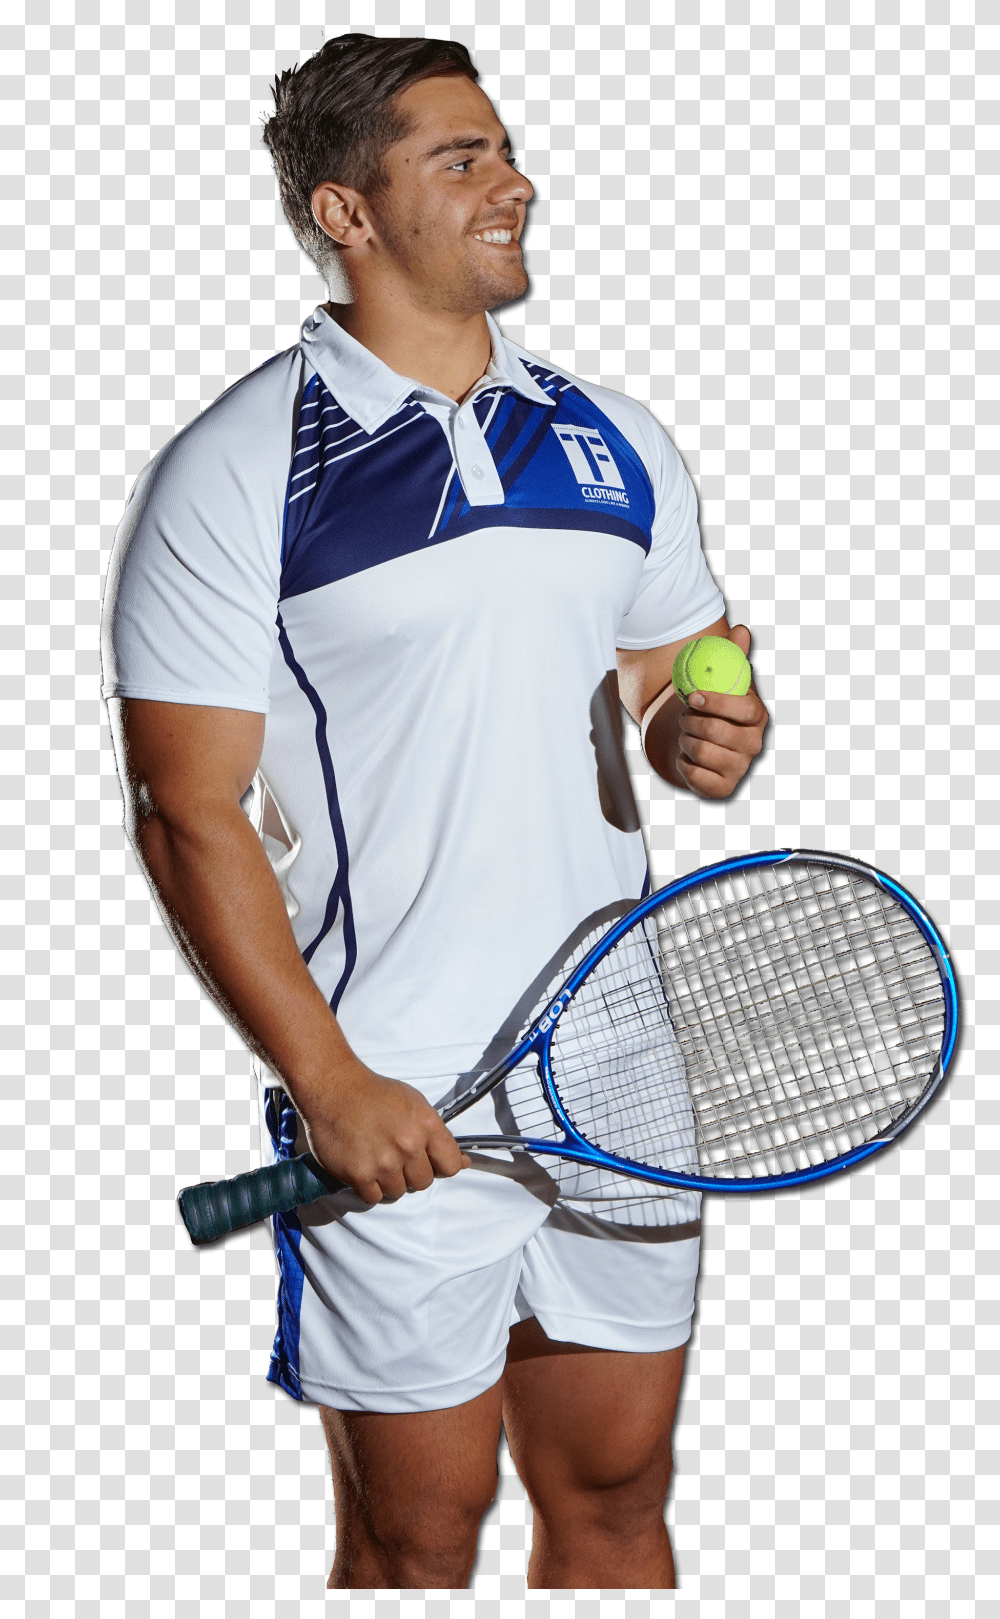 Tennis Player Download Tennis Player Transparent Png